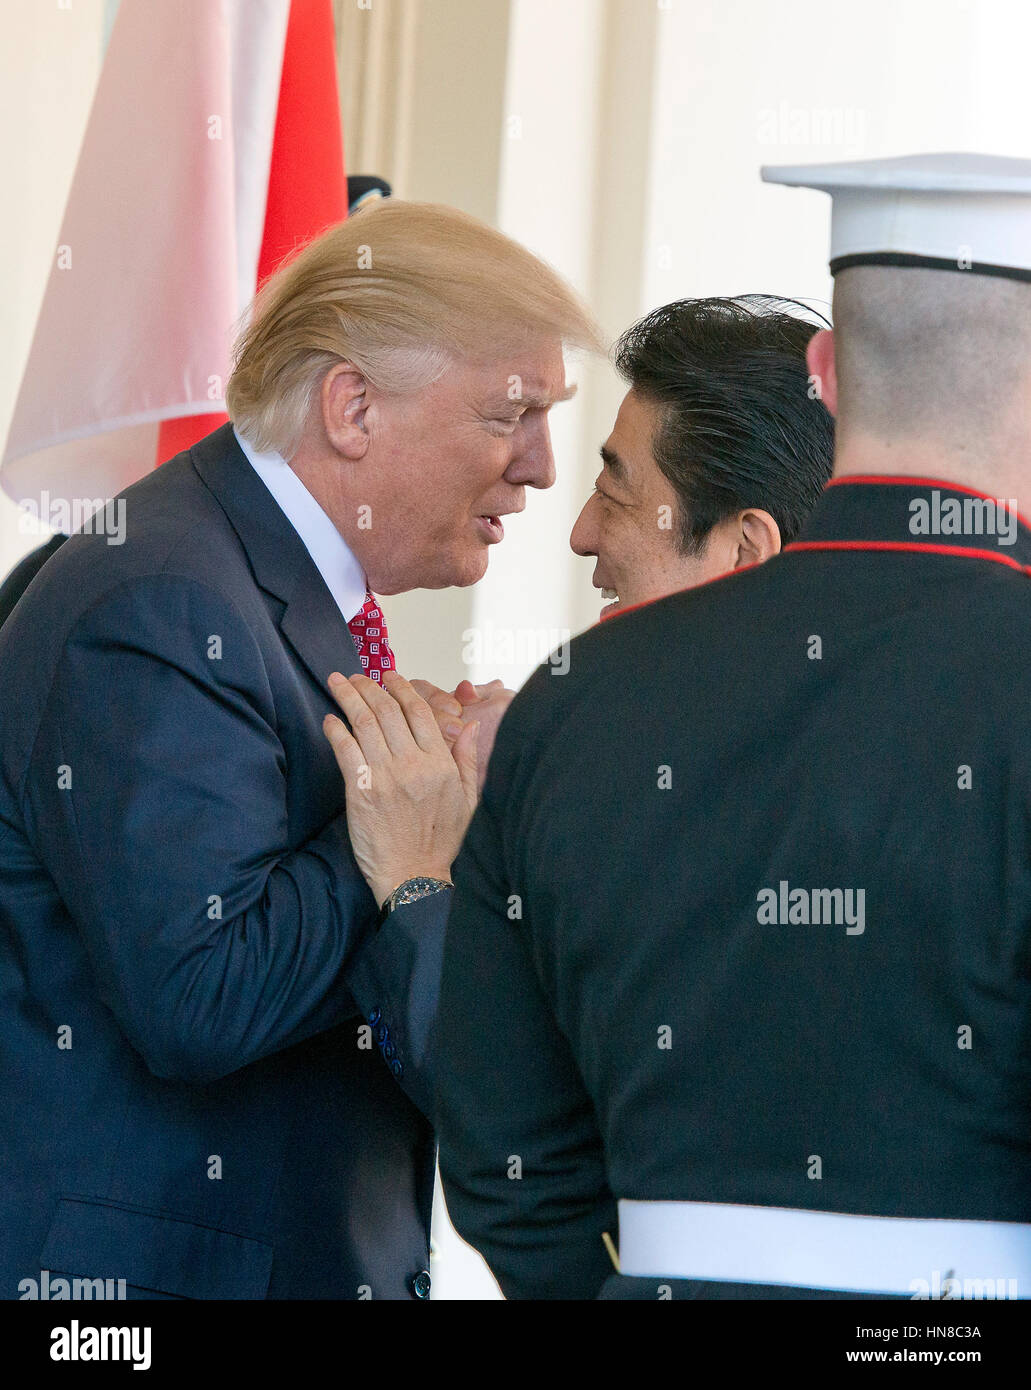 Washington DC, USA. 10th February 2017. United States President Donald J. Trump welcomes Prime Minister Shinz? Abe of Japan to the White House in Washington, DC on Friday, February 10, 2017. Stock Photo